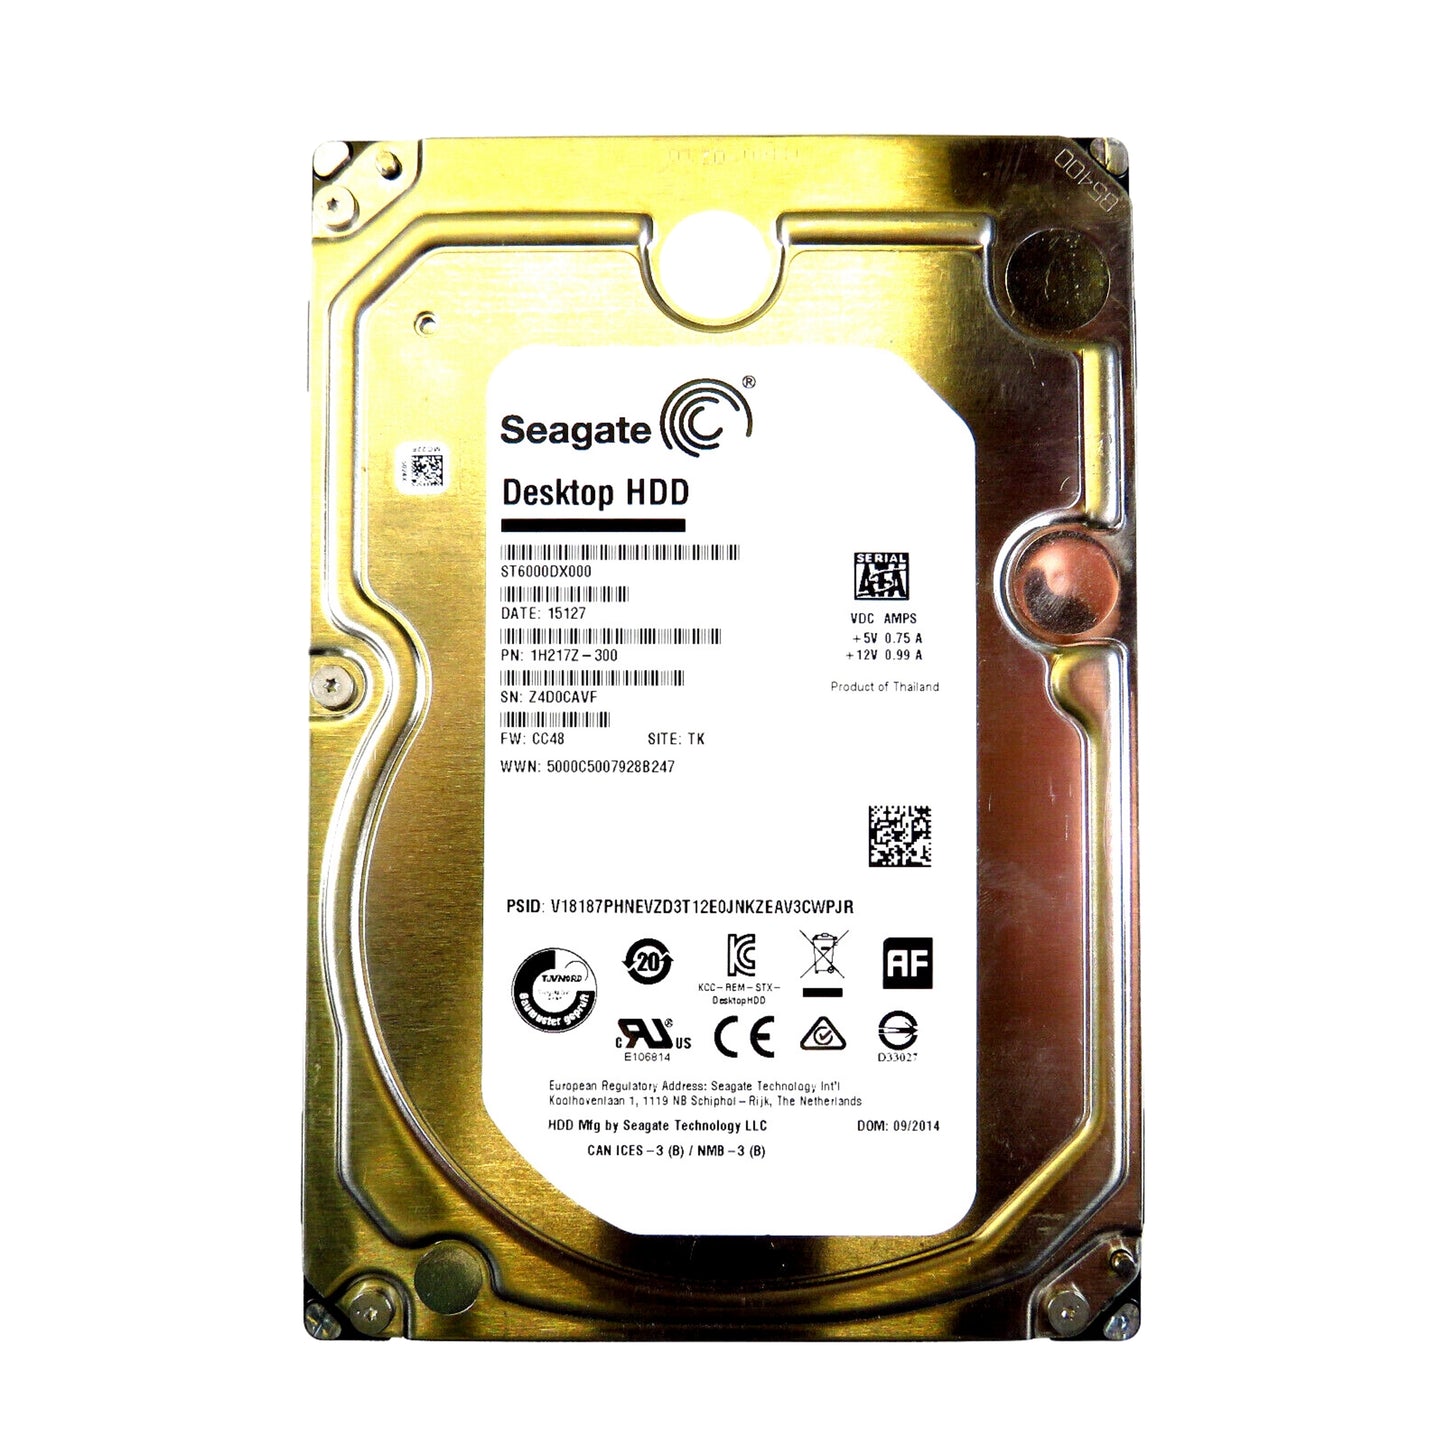 Seagate ST6000DX000 3.5" 6TB 7200RPM SATA III Hard Disk Drive (HDD), Silver (Refurbished)